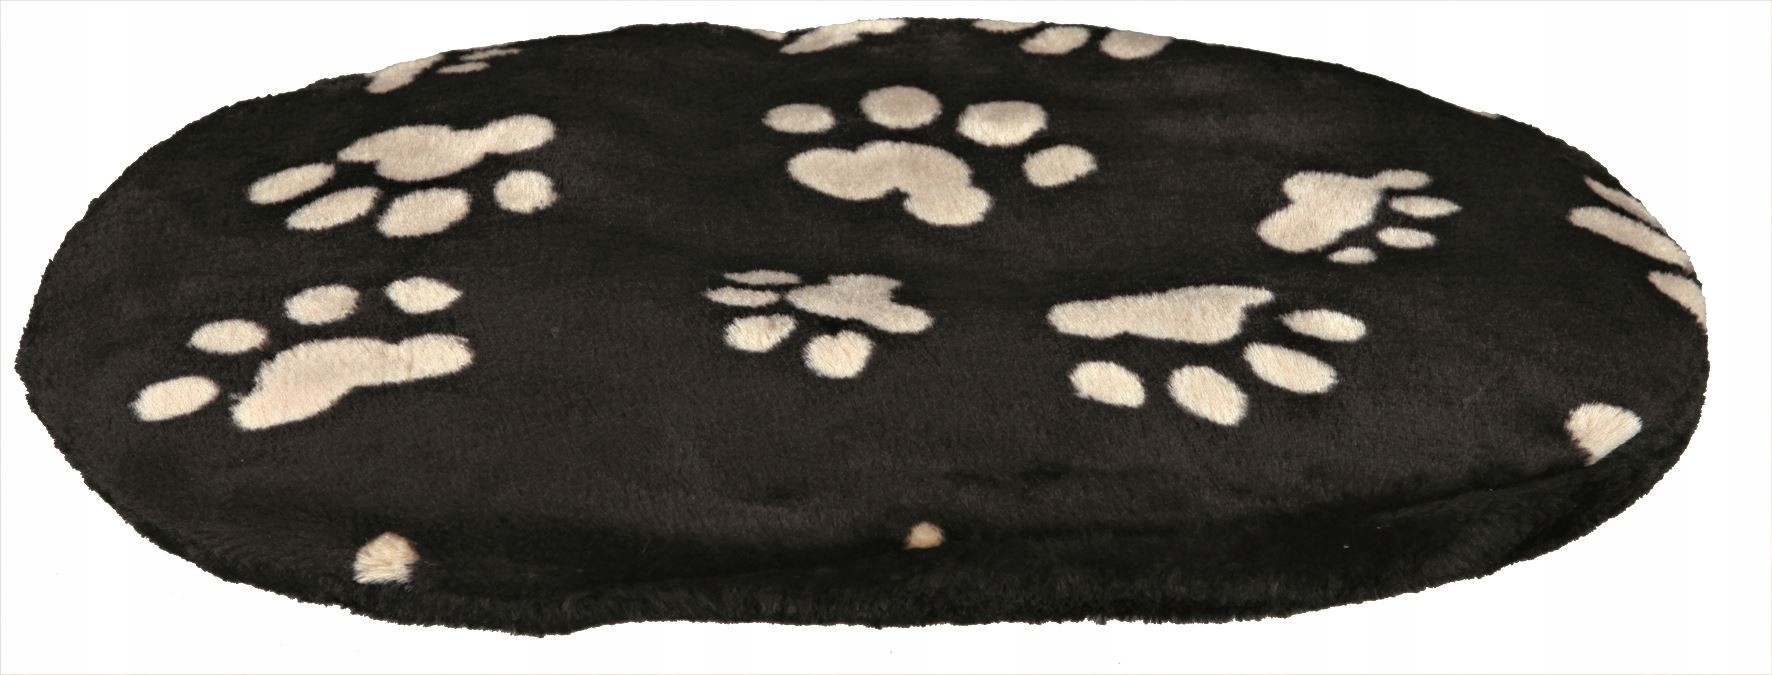 Лежанка для кошки, собаки TRIXIE плюш, полиэстер 47x70x4см черный, бежевый